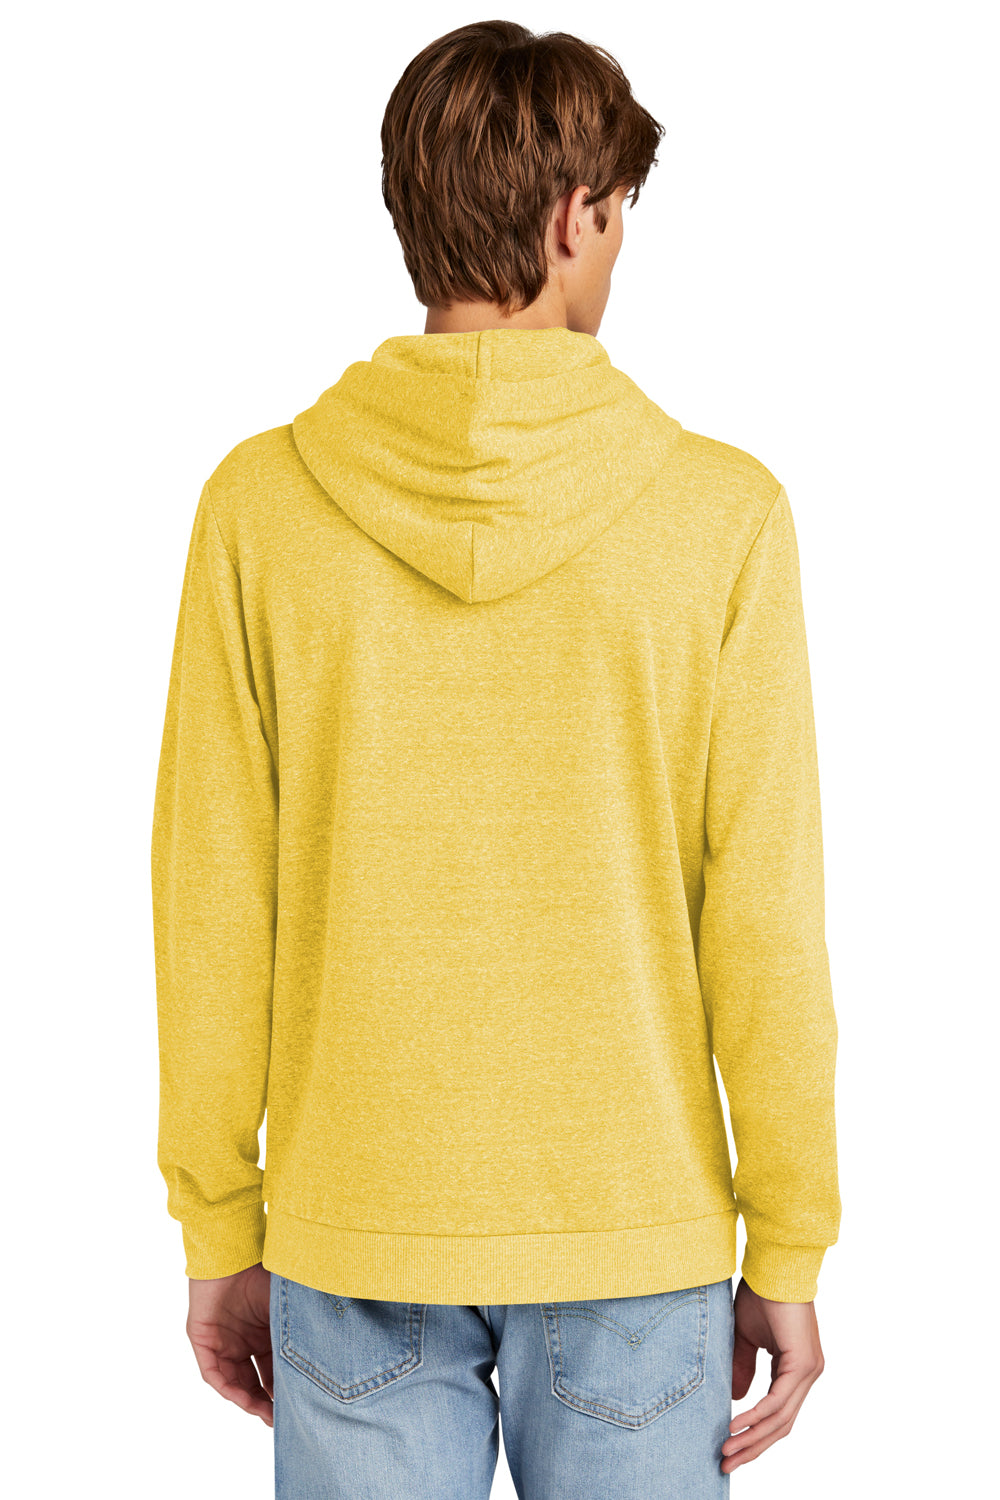 District DT1300 Mens Perfect Tri Fleece Hooded Sweatshirt Hoodie Heather Ochre Yellow Back